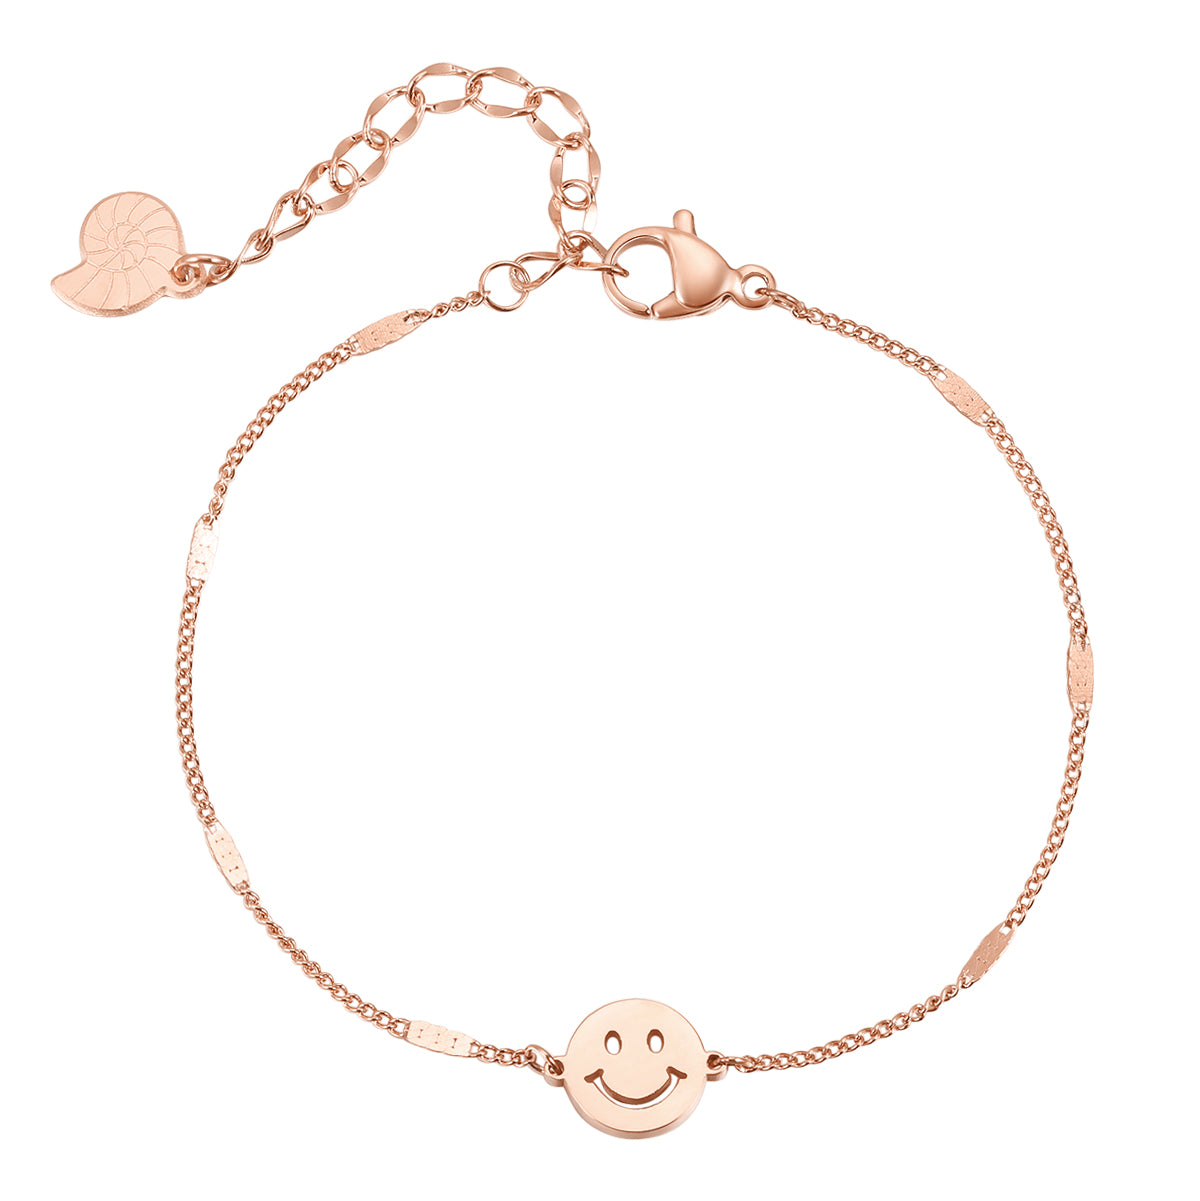 Smiley Face Pendant Chain Bracelet Rose Gold